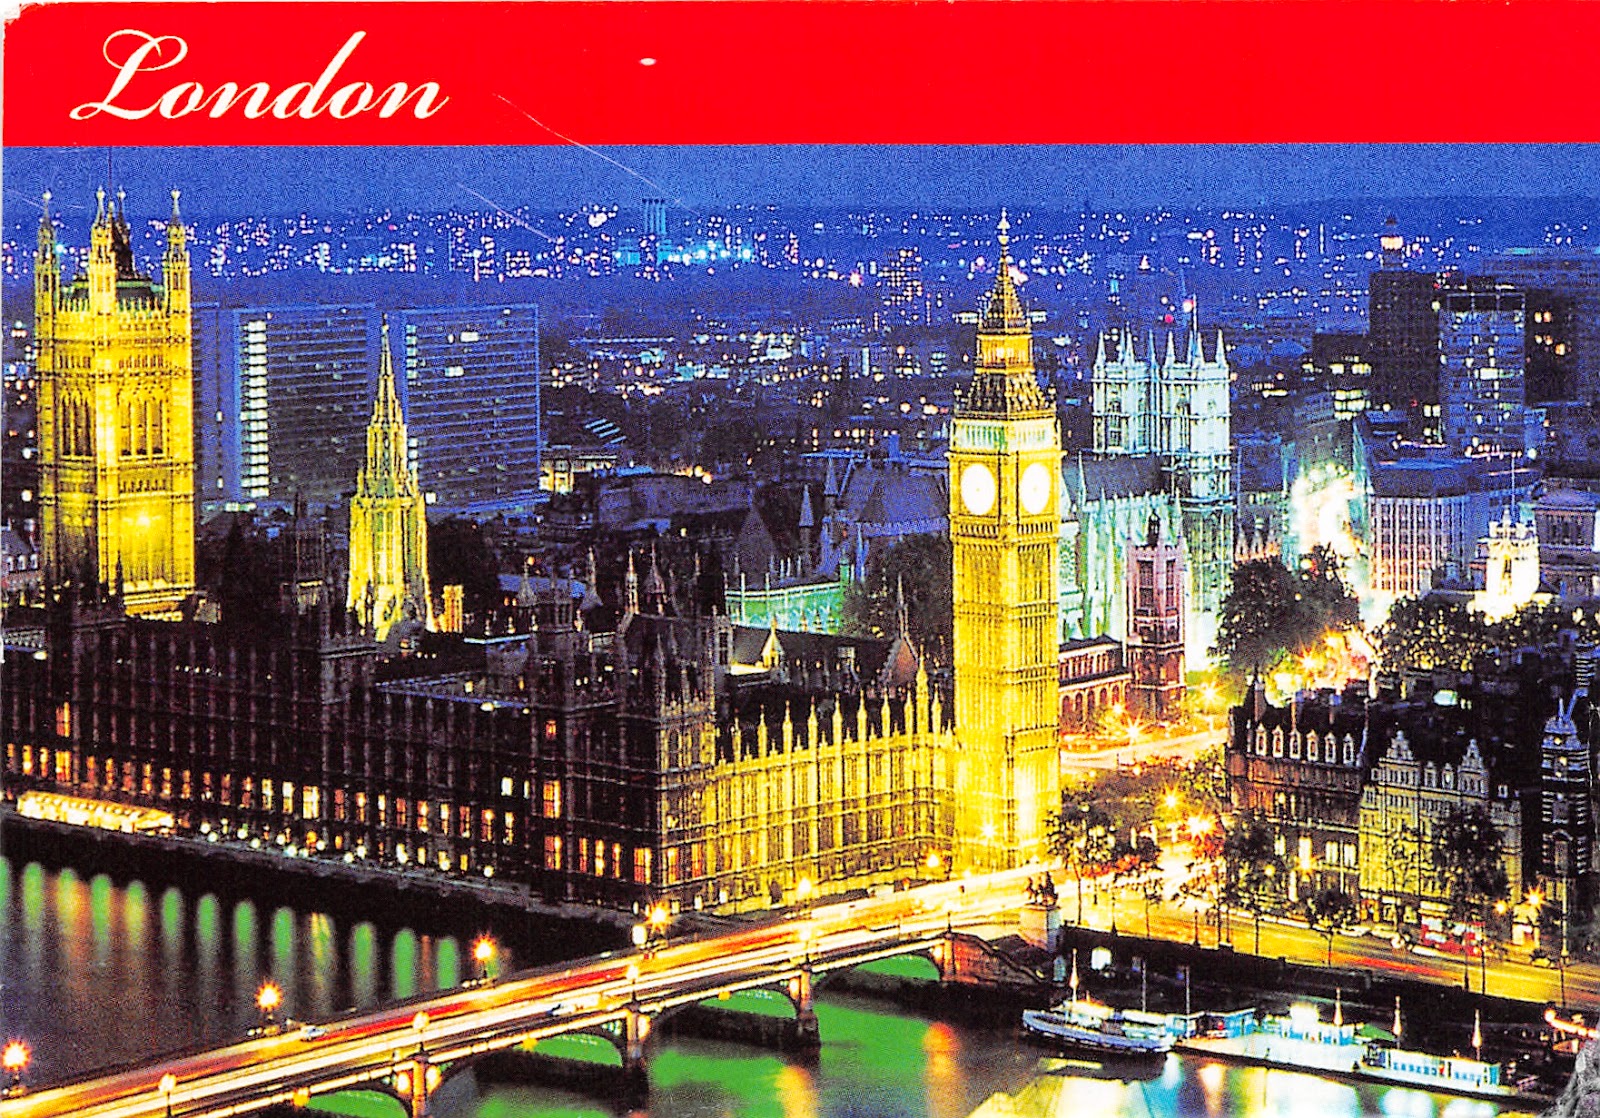 The capital of united kingdom is london. London столица. Лондон - столица Великобритании и один из крупнейших городов. London Capital на английском. London is the Capital of great Britain.